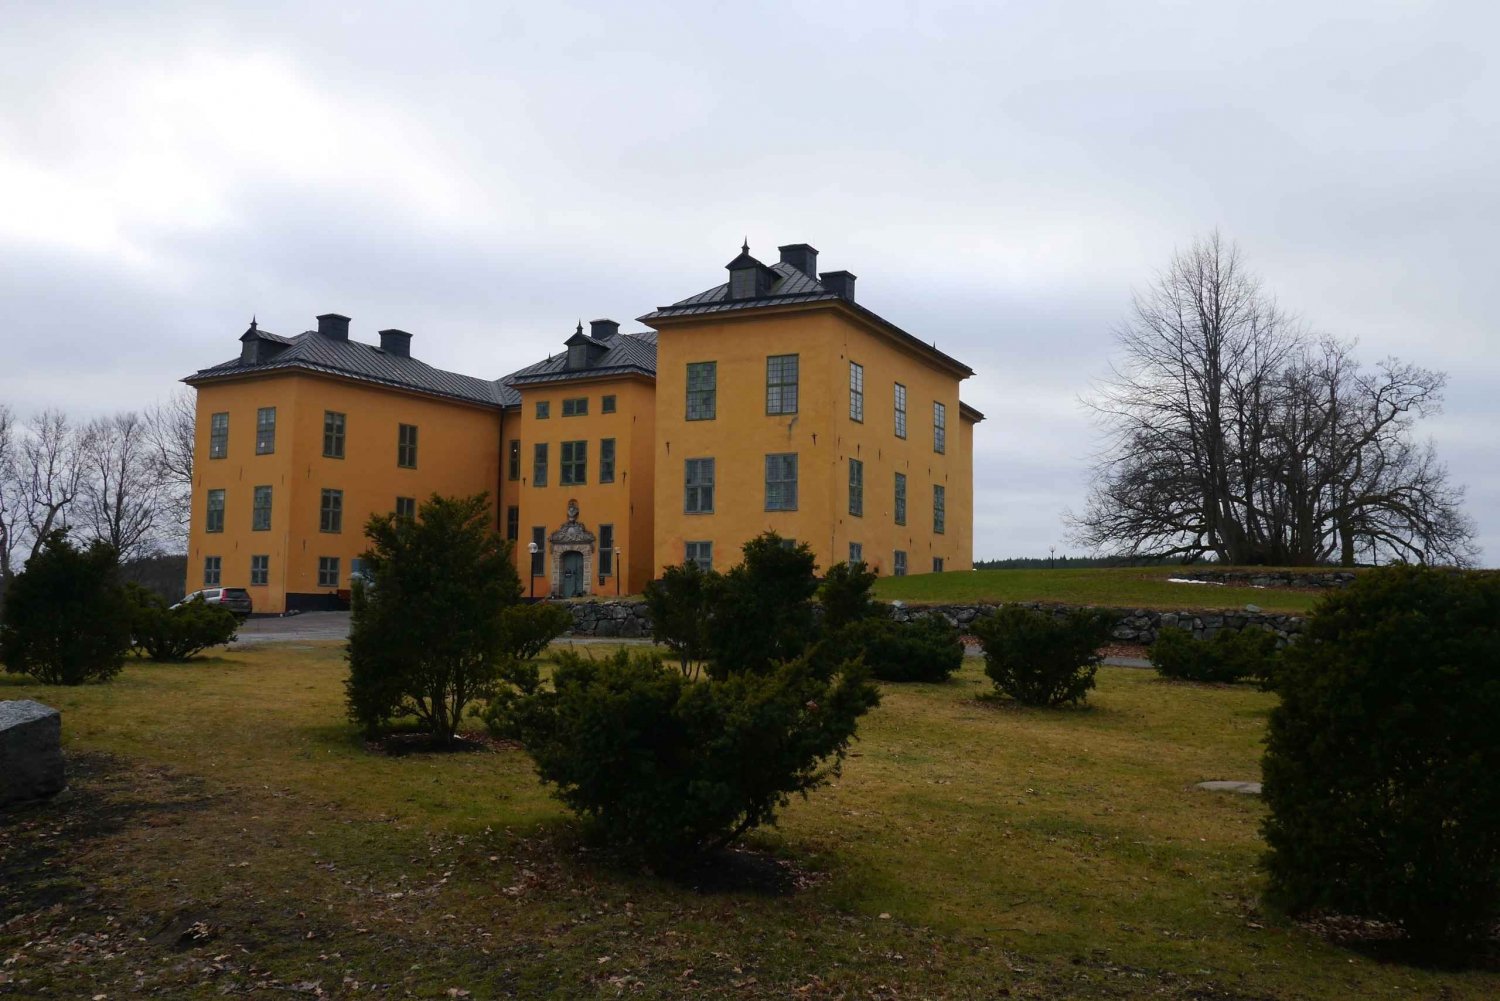 1-daagse 7 uur durende rondleiding door het koninklijk paleis en het kasteel vanuit Stockholm